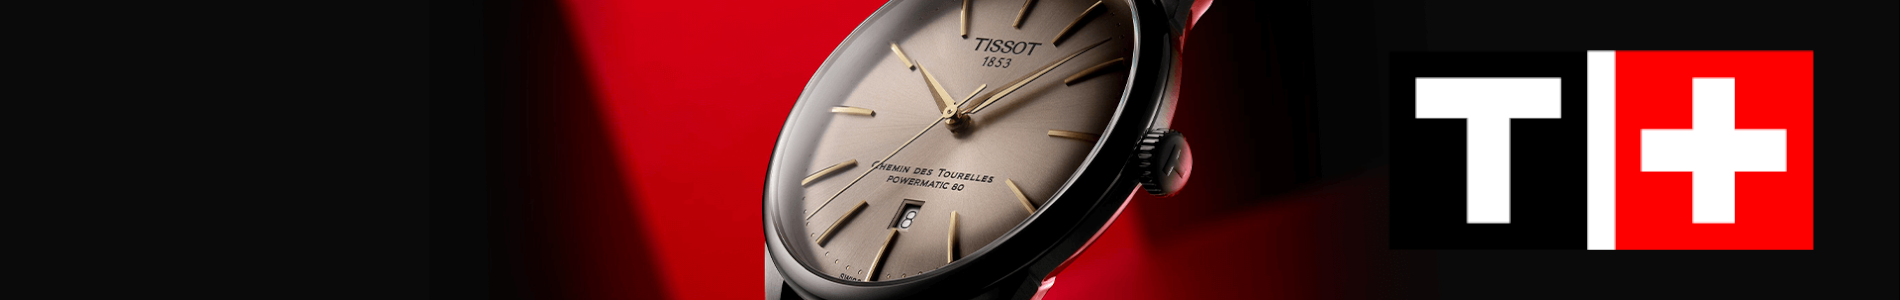 Tissot Le Locle - Uhren mit Tradition